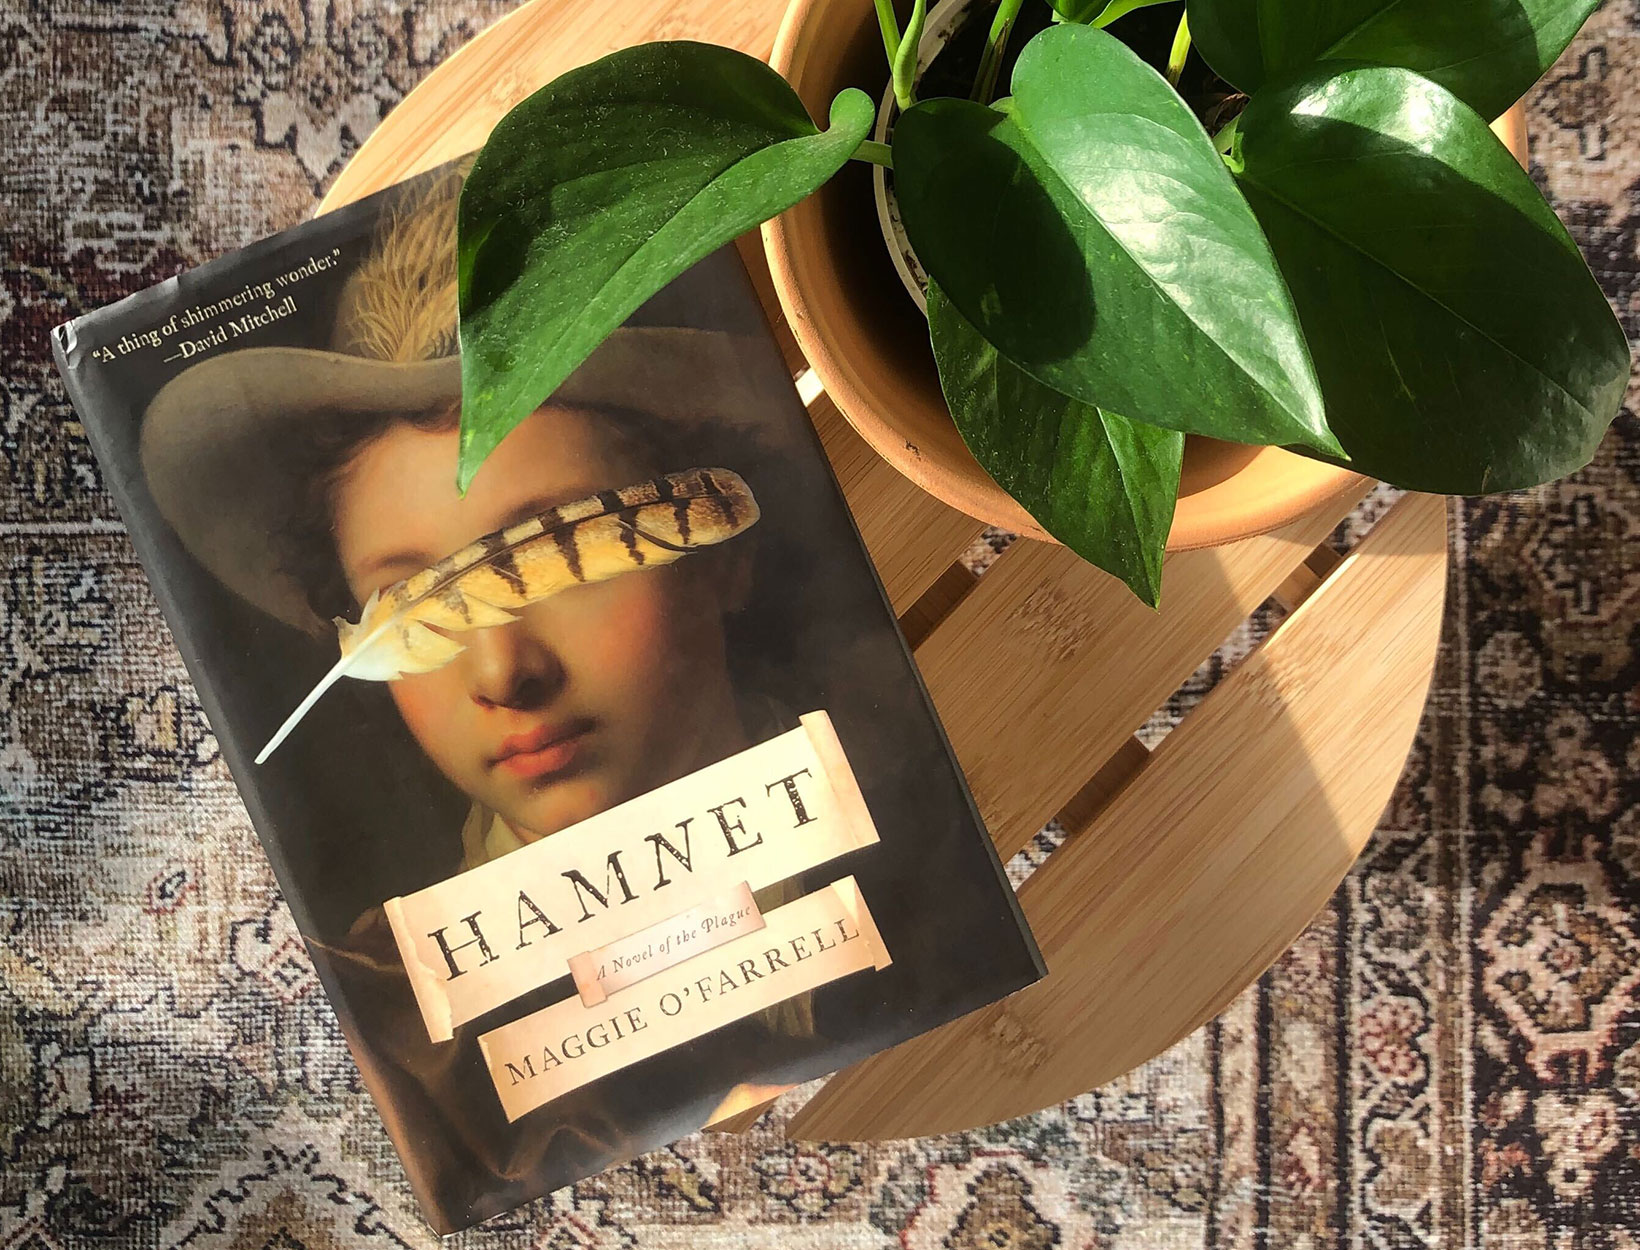 HAMNET by Maggie O’Farrell